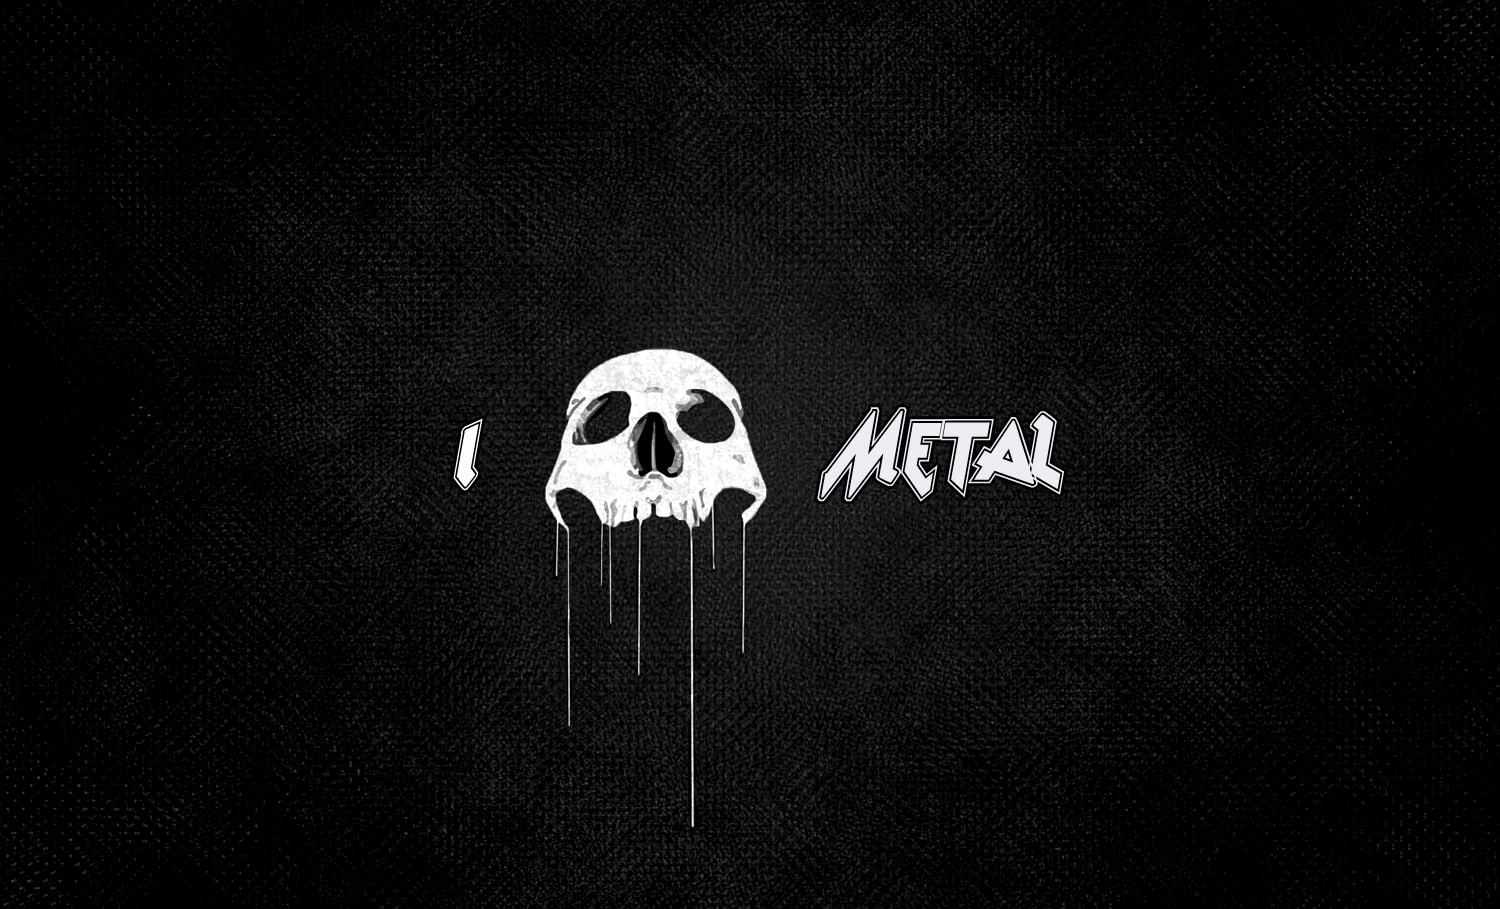 Metal Music Wallpaper